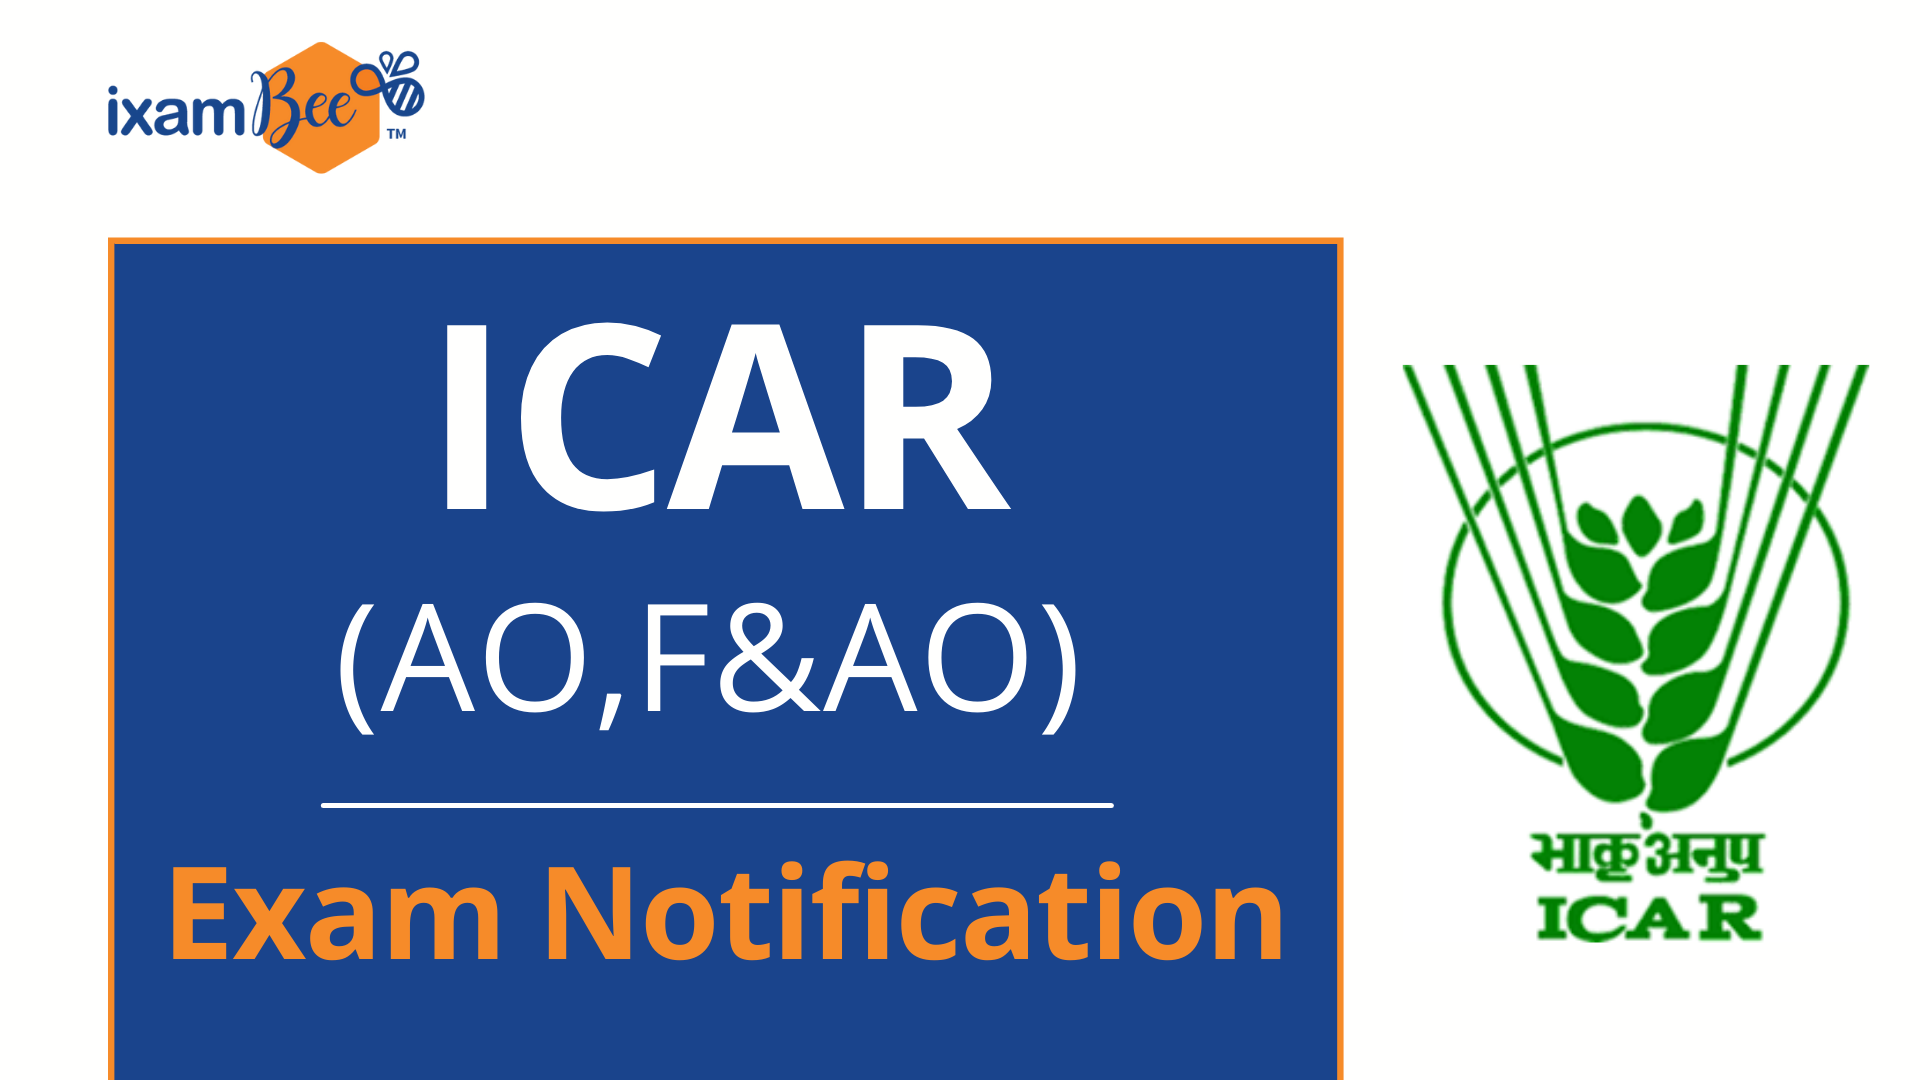 ICAR notification